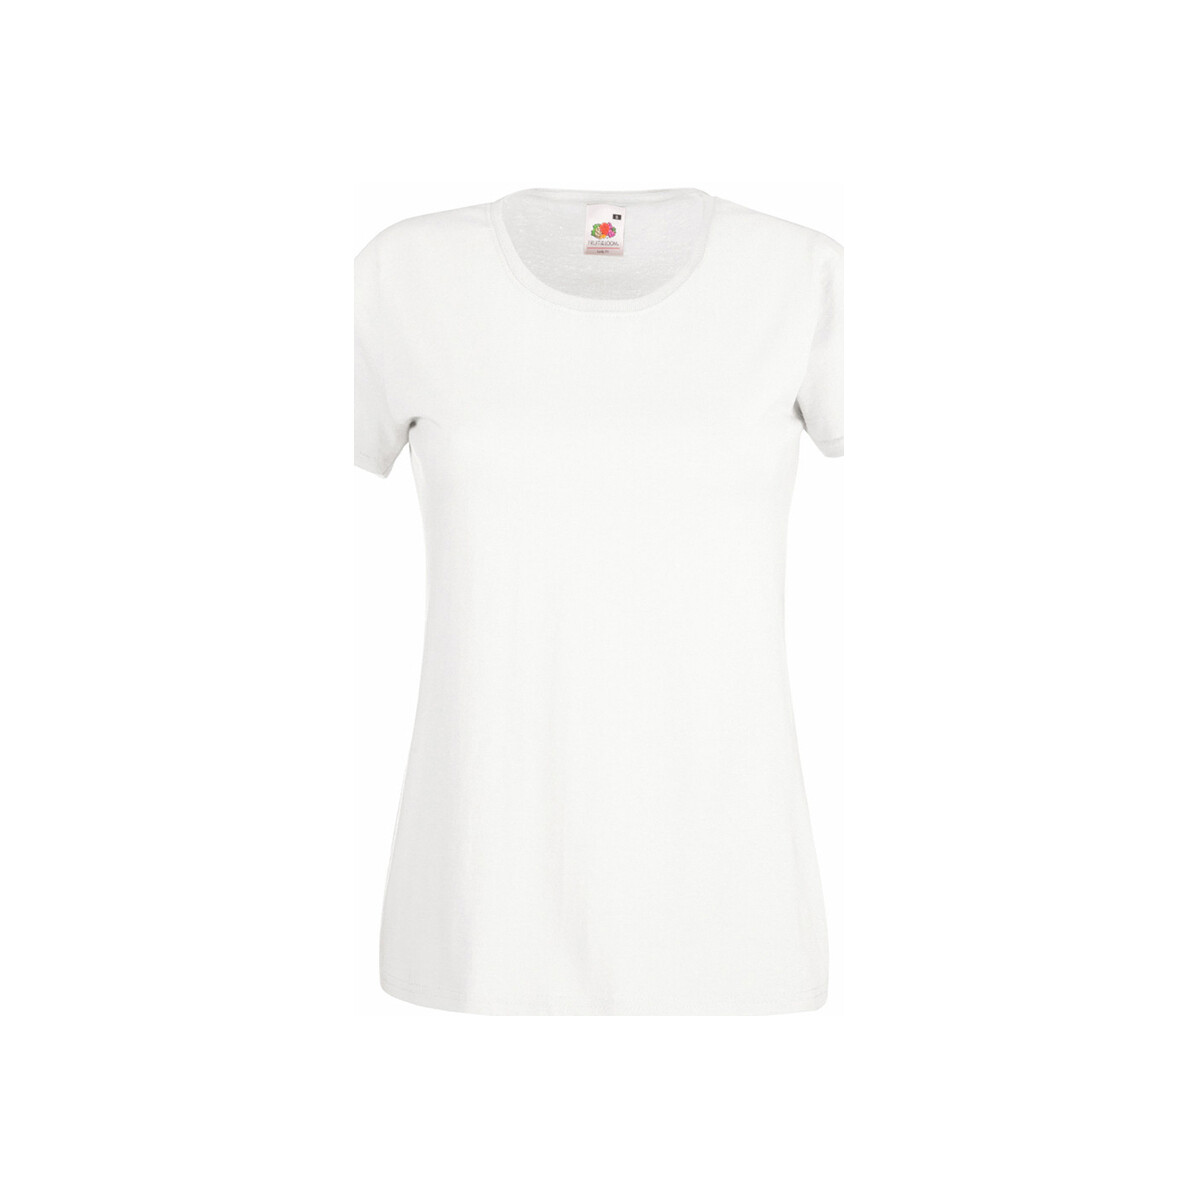 textil Mujer Camisetas manga corta Universal Textiles 61372 Blanco